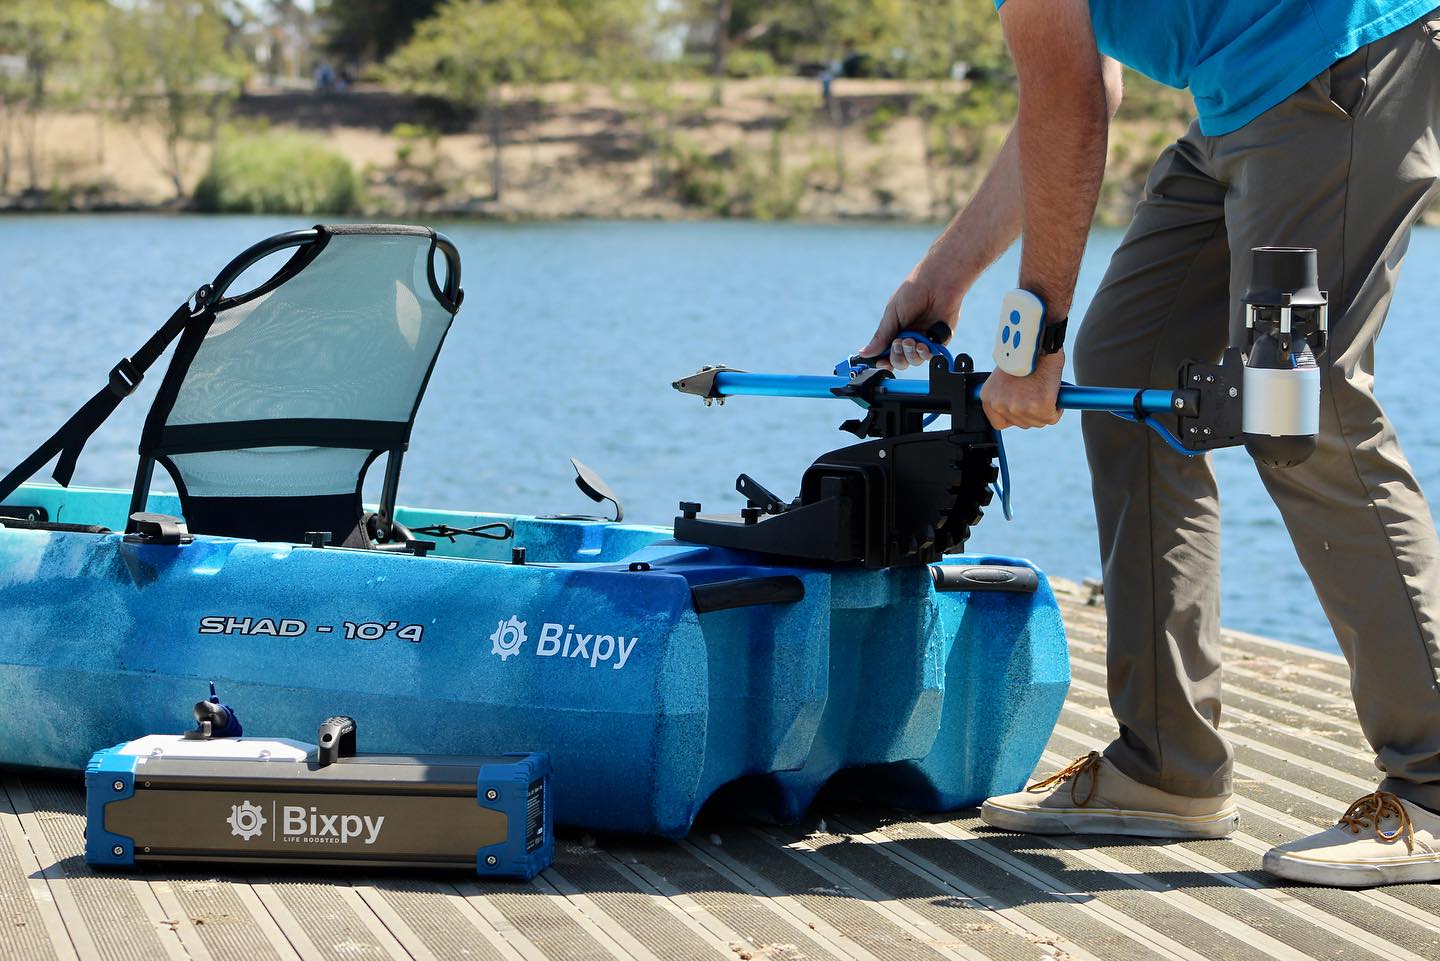 Vanhuyks kayak with Bixpy gear